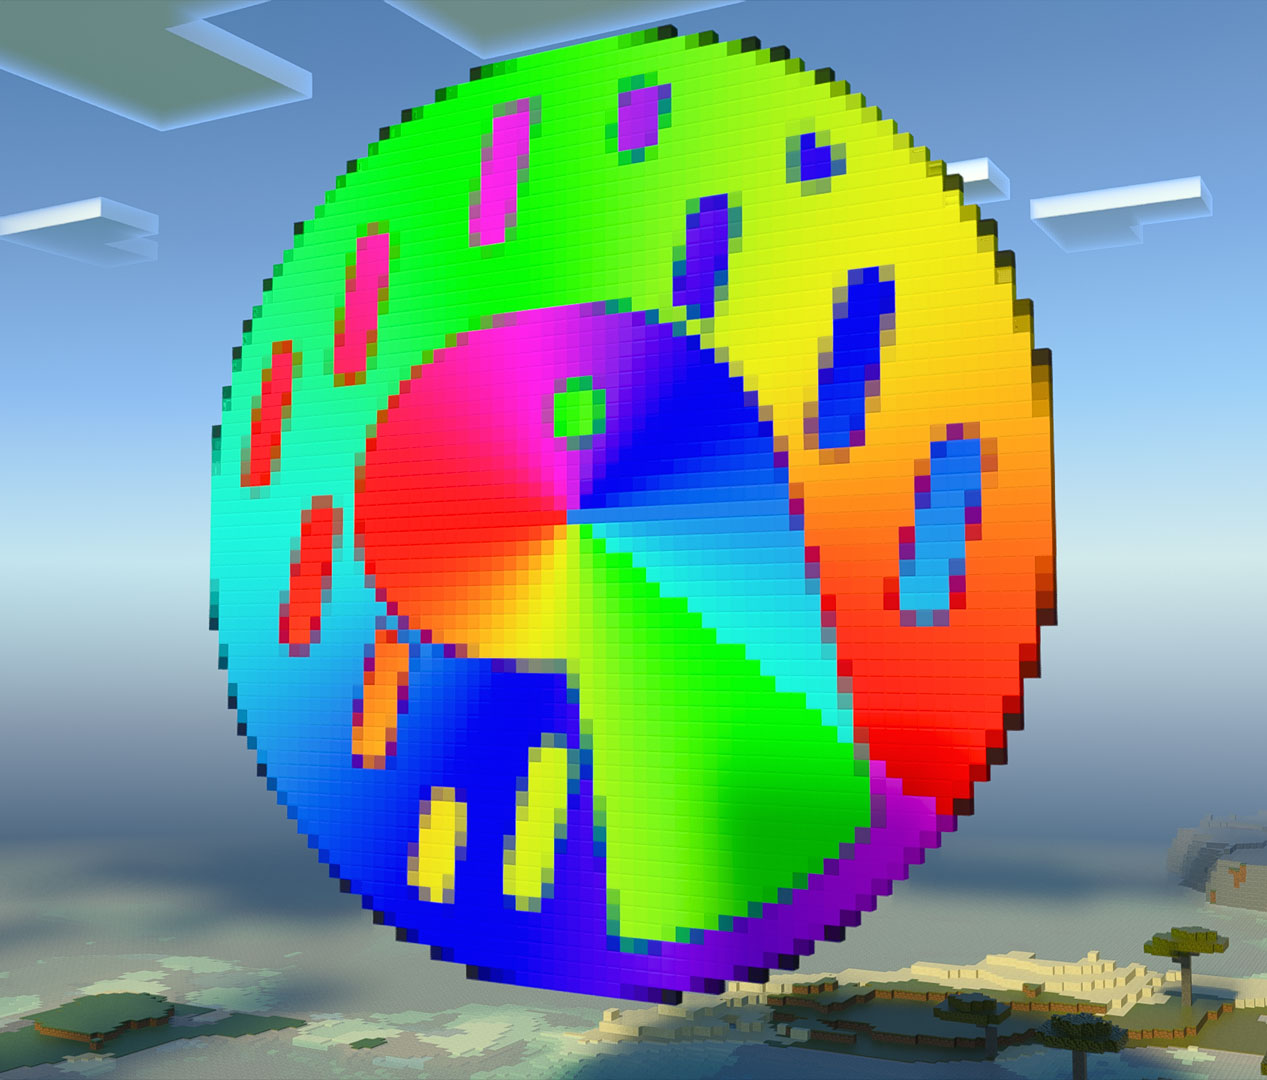 Colorful Deno logo made in Minecraft